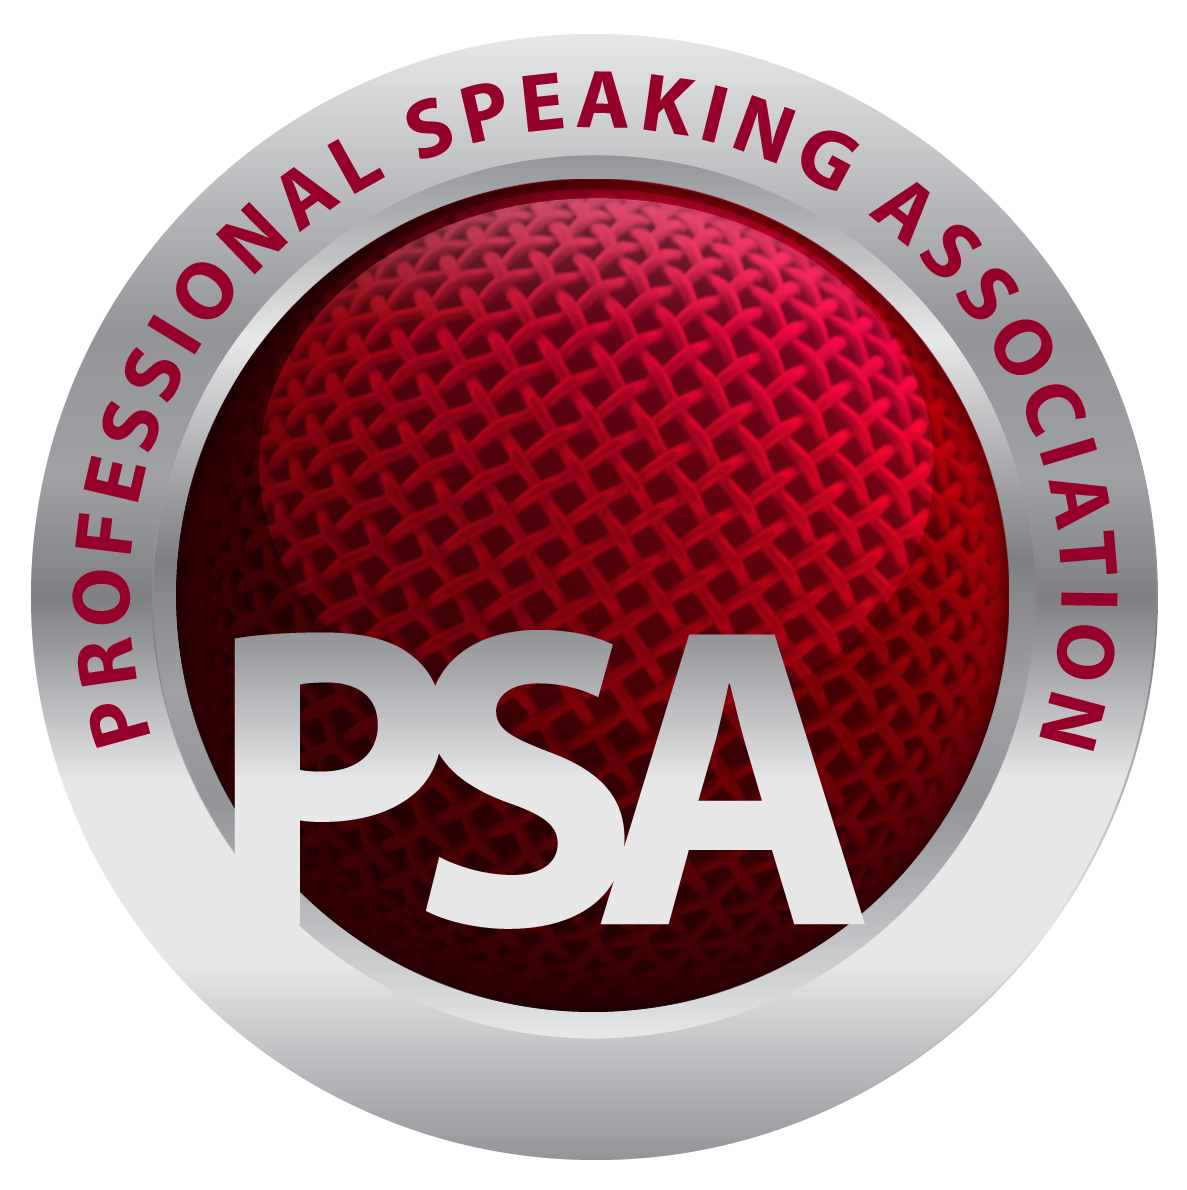 Professional Speaking Association member